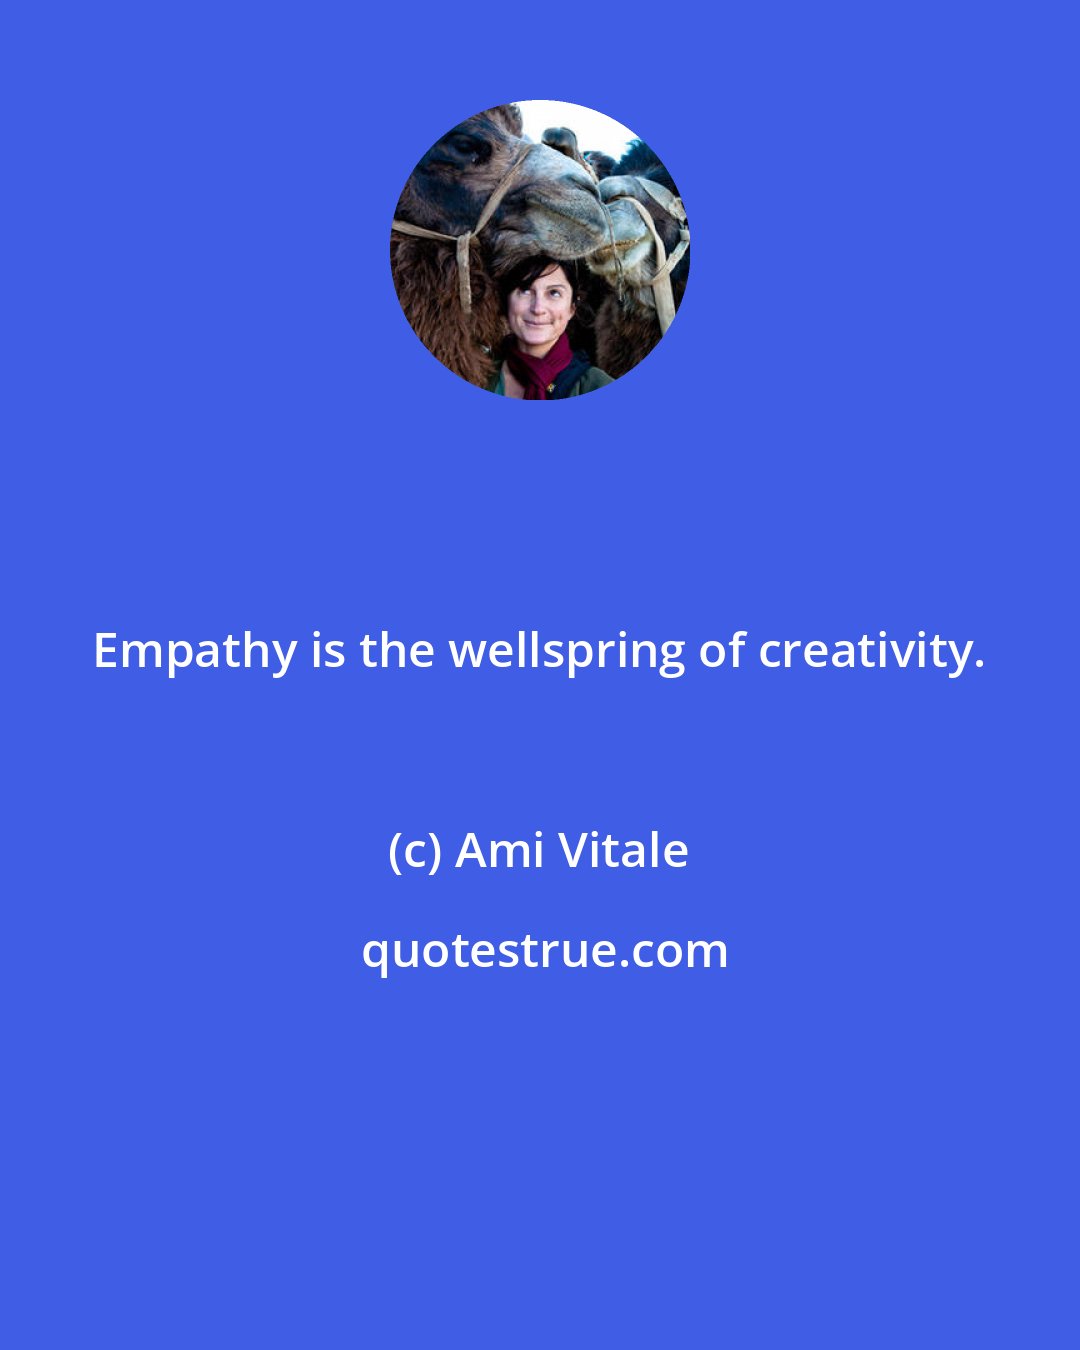 Ami Vitale: Empathy is the wellspring of creativity.